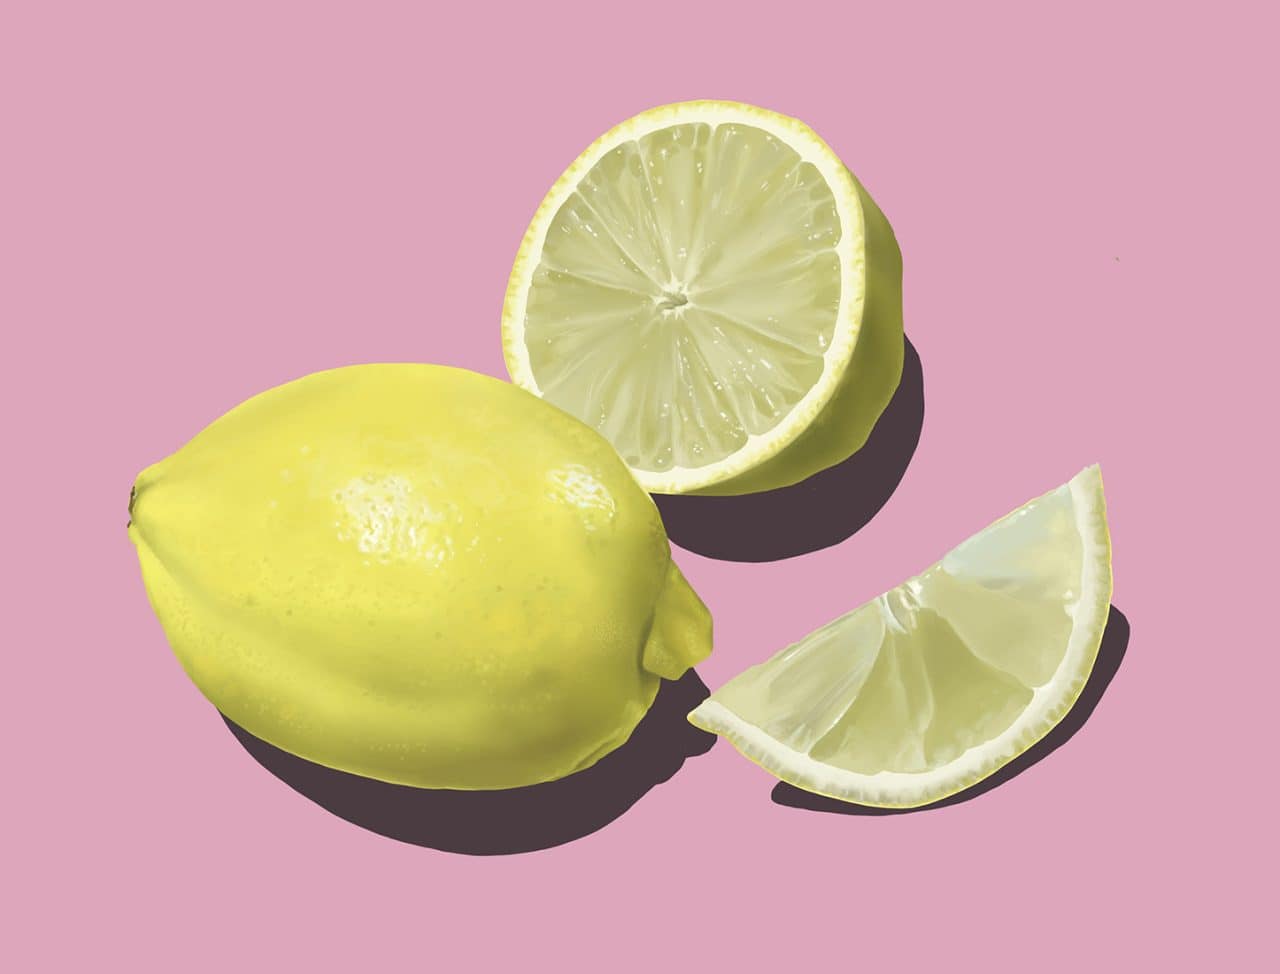 How To Draw a Lemon Step by Step Procreate Tutorial